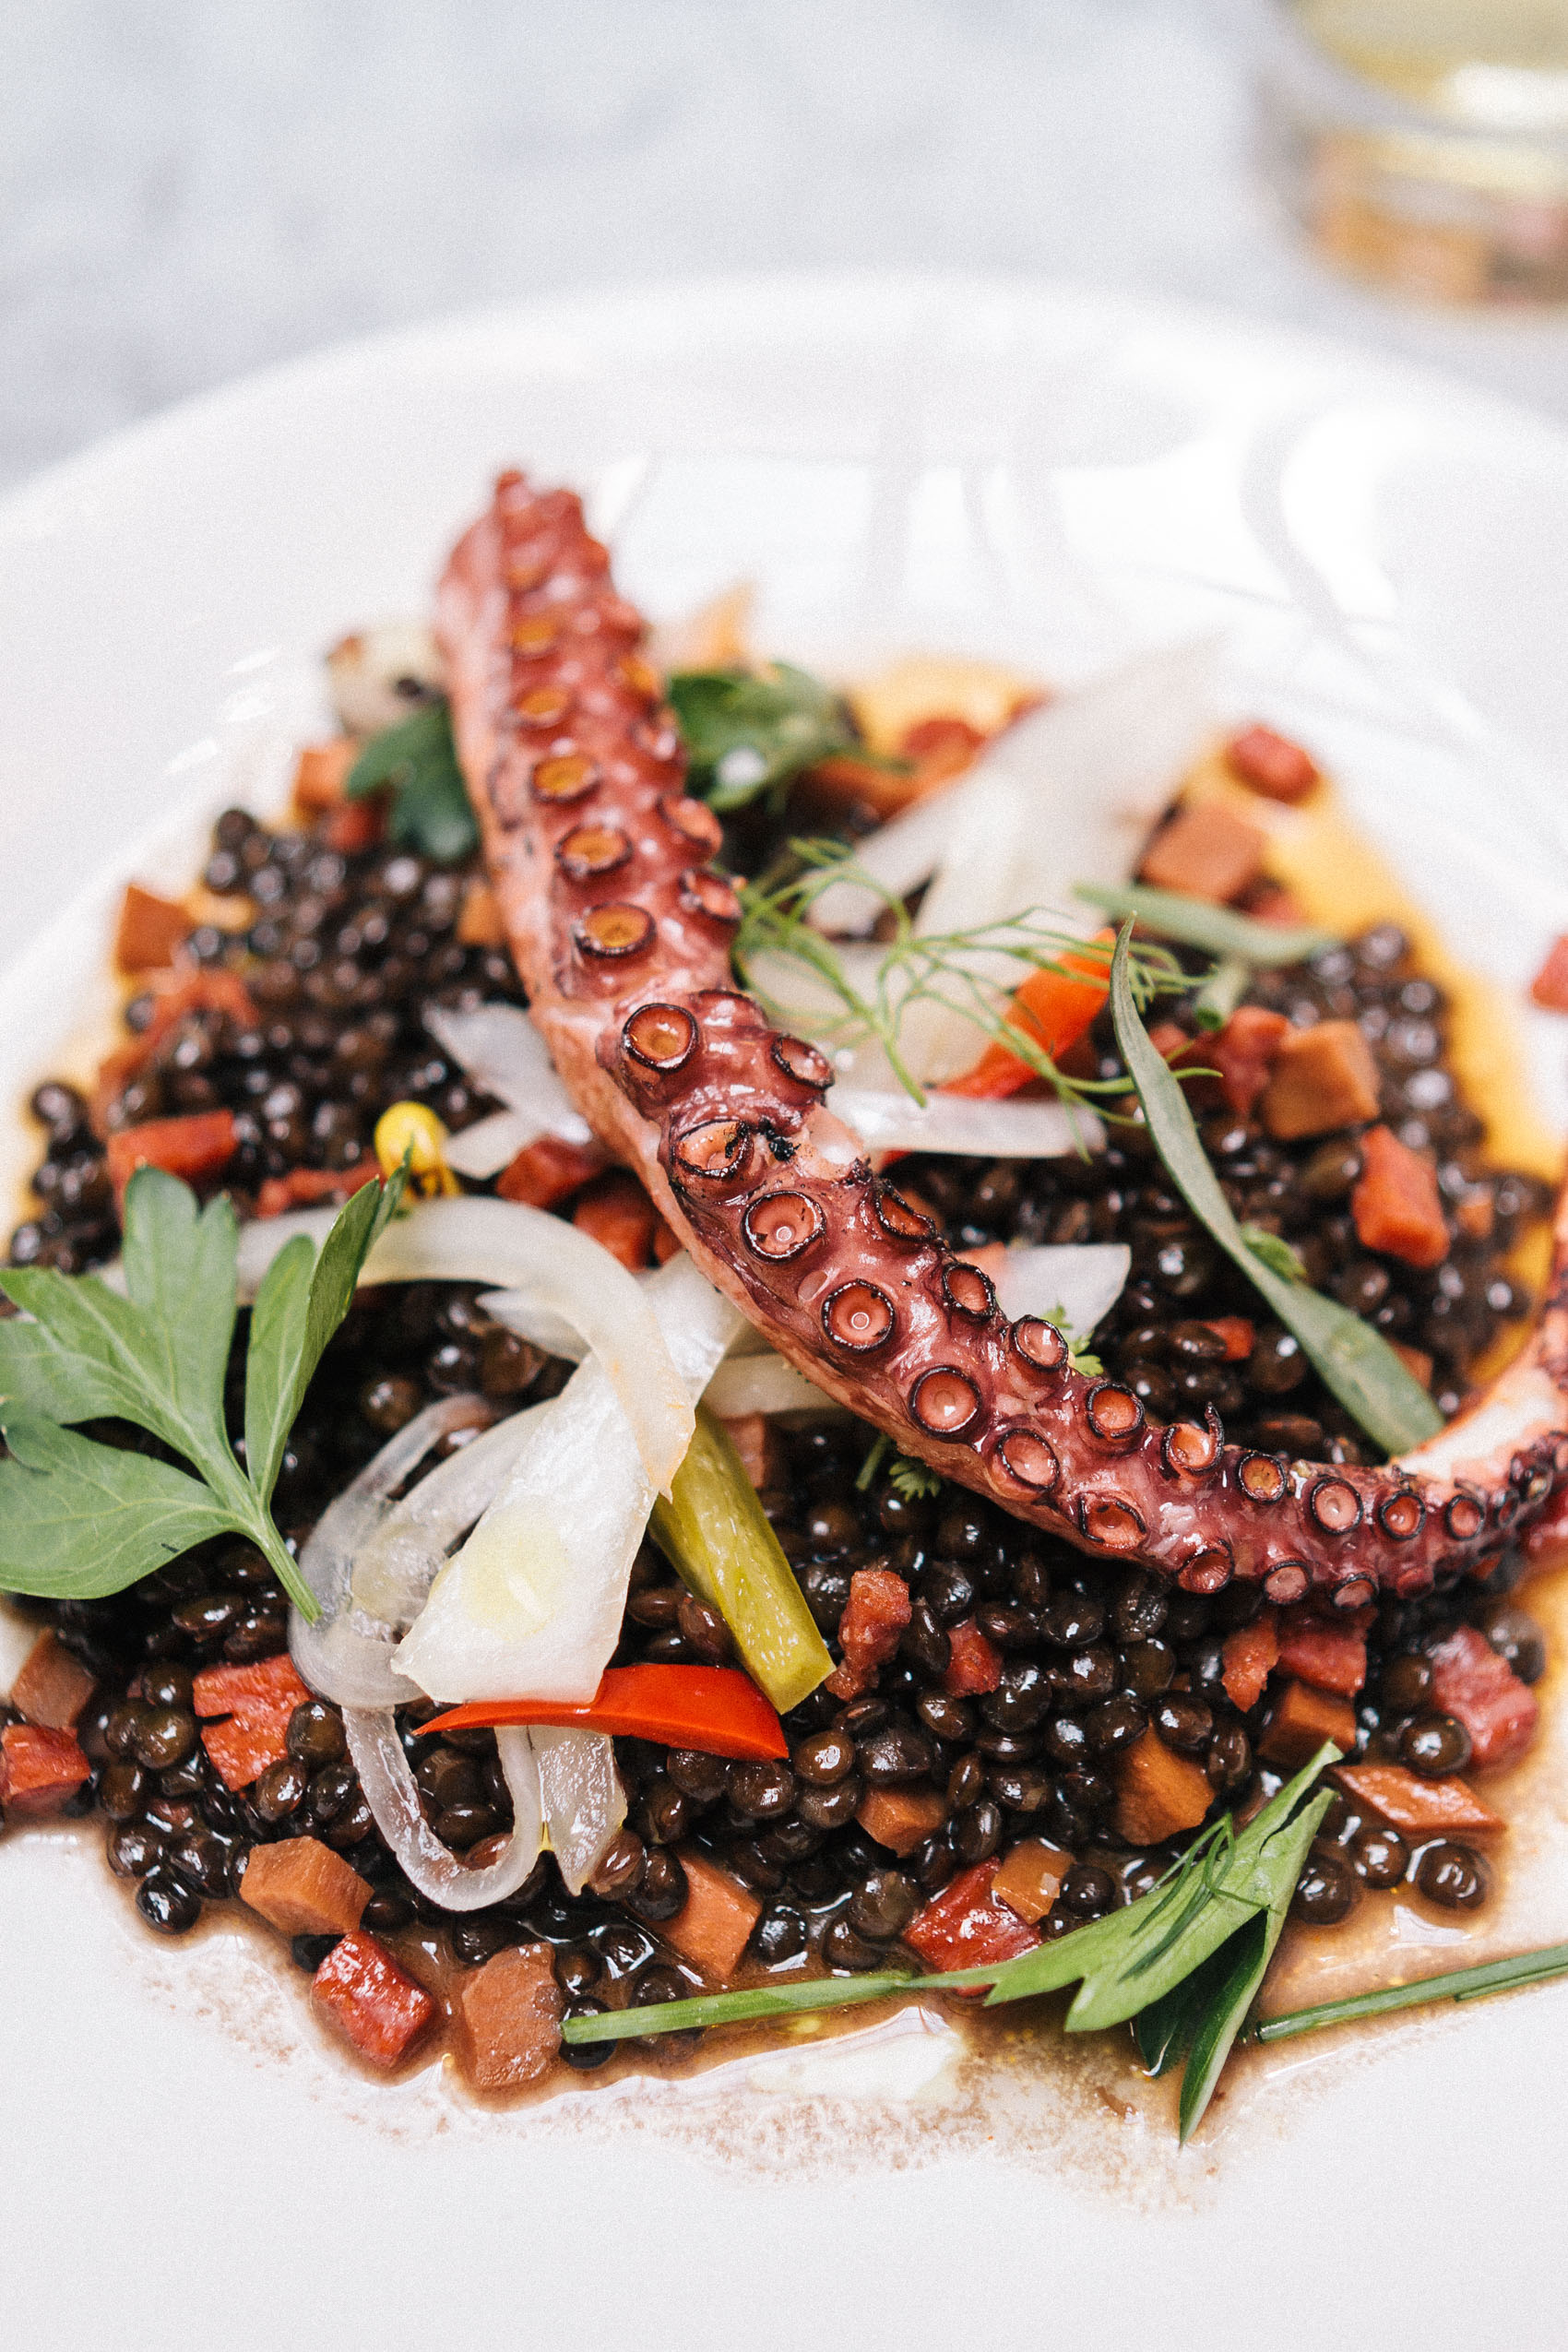 Octopus and lentil salad at Salt Air restaurant in Venice Beach